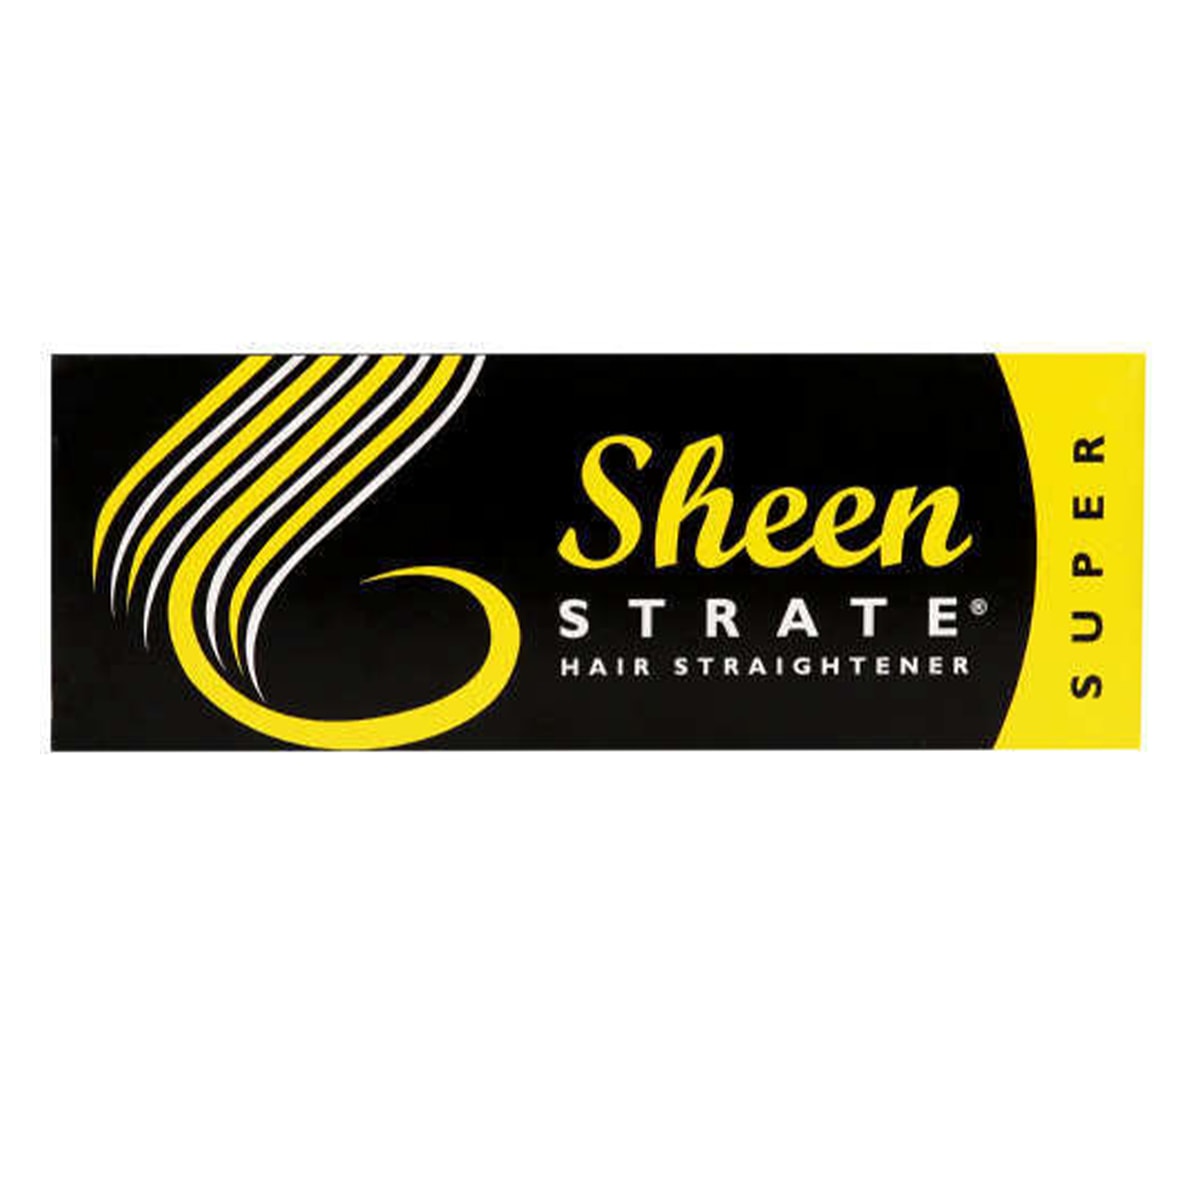 Buy Sheen Strate Hair Straightener (Super) - 50 ml